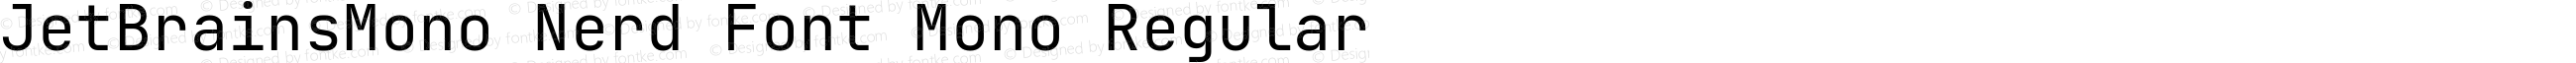 JetBrains Mono Regular Nerd Font Complete Mono